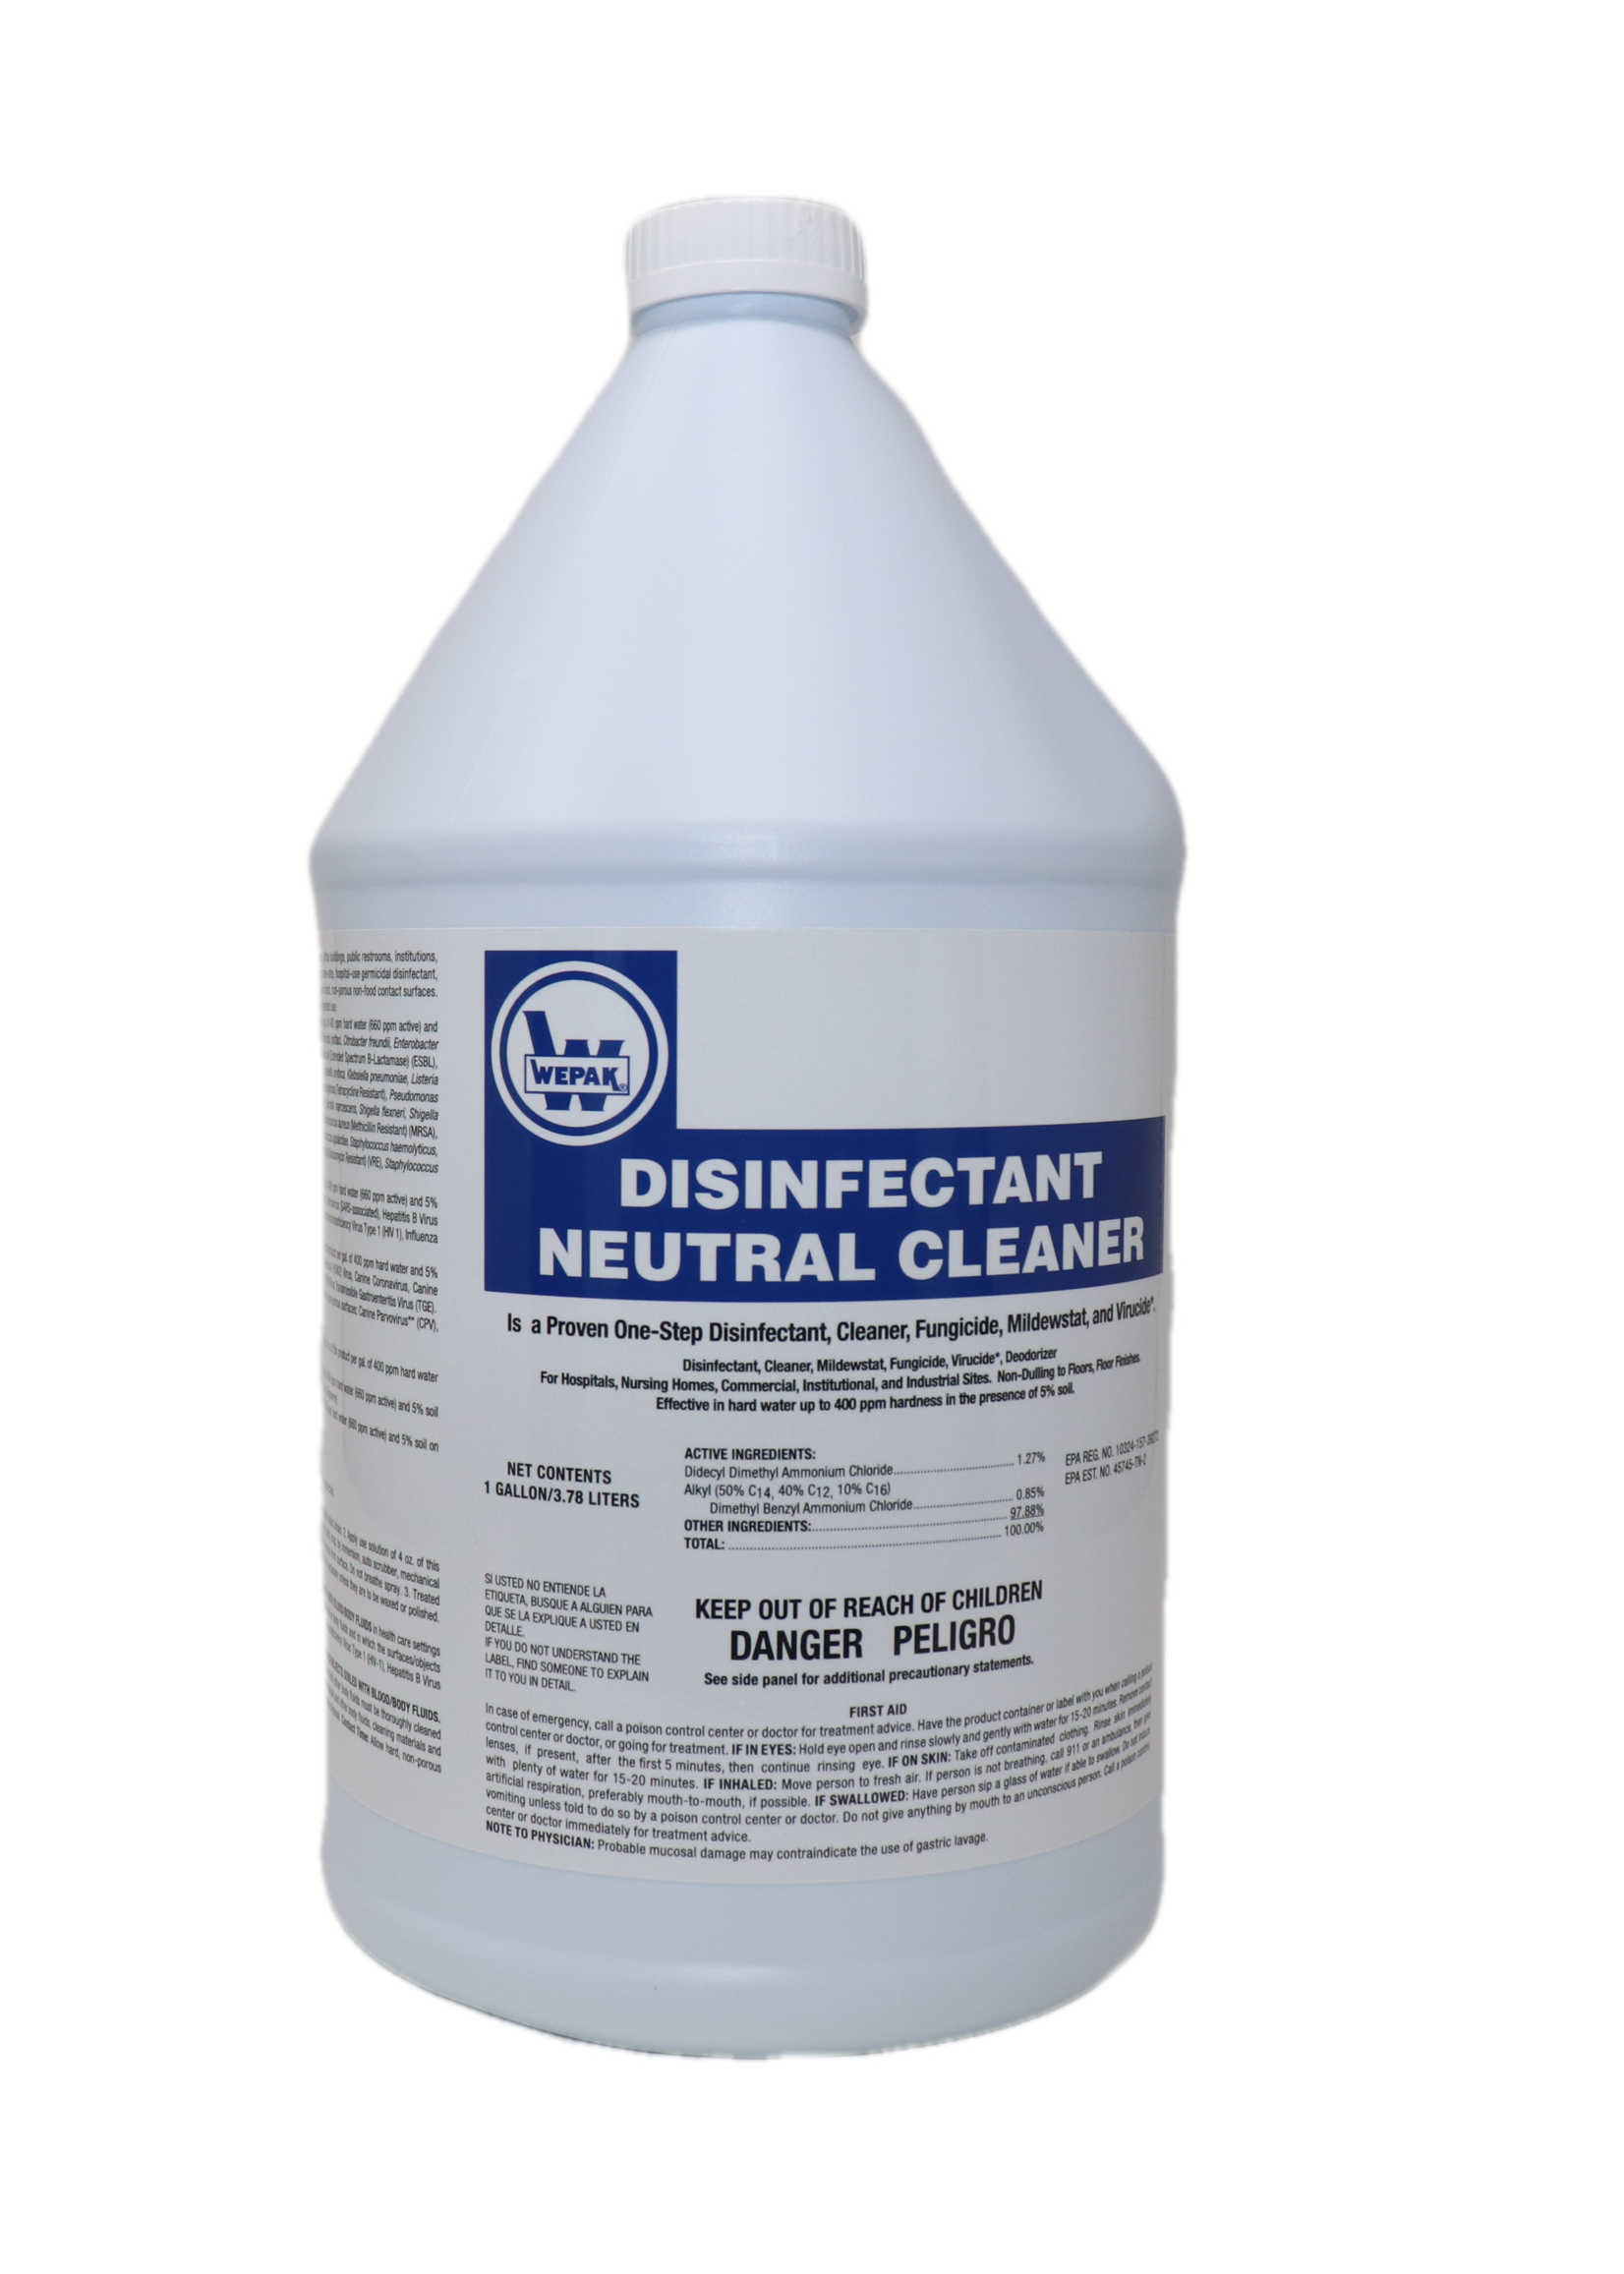 WePak Disinfectant Neutral Cleaner "Fresh Scent"